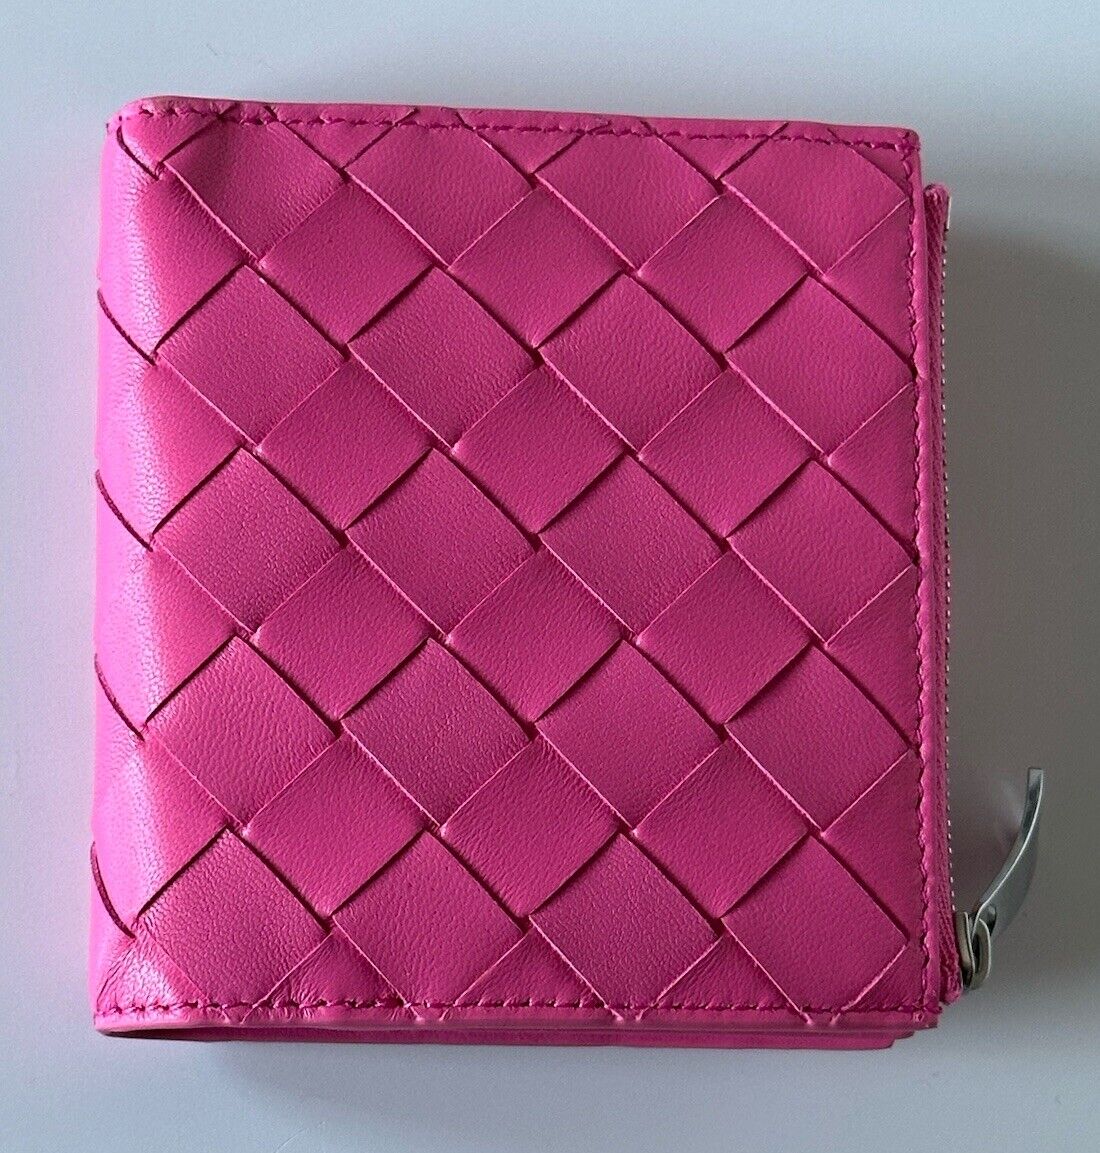 Bottega Veneta Intrecciato Napa Leather Zipper Wallet Pink IT 600270 NWT $630